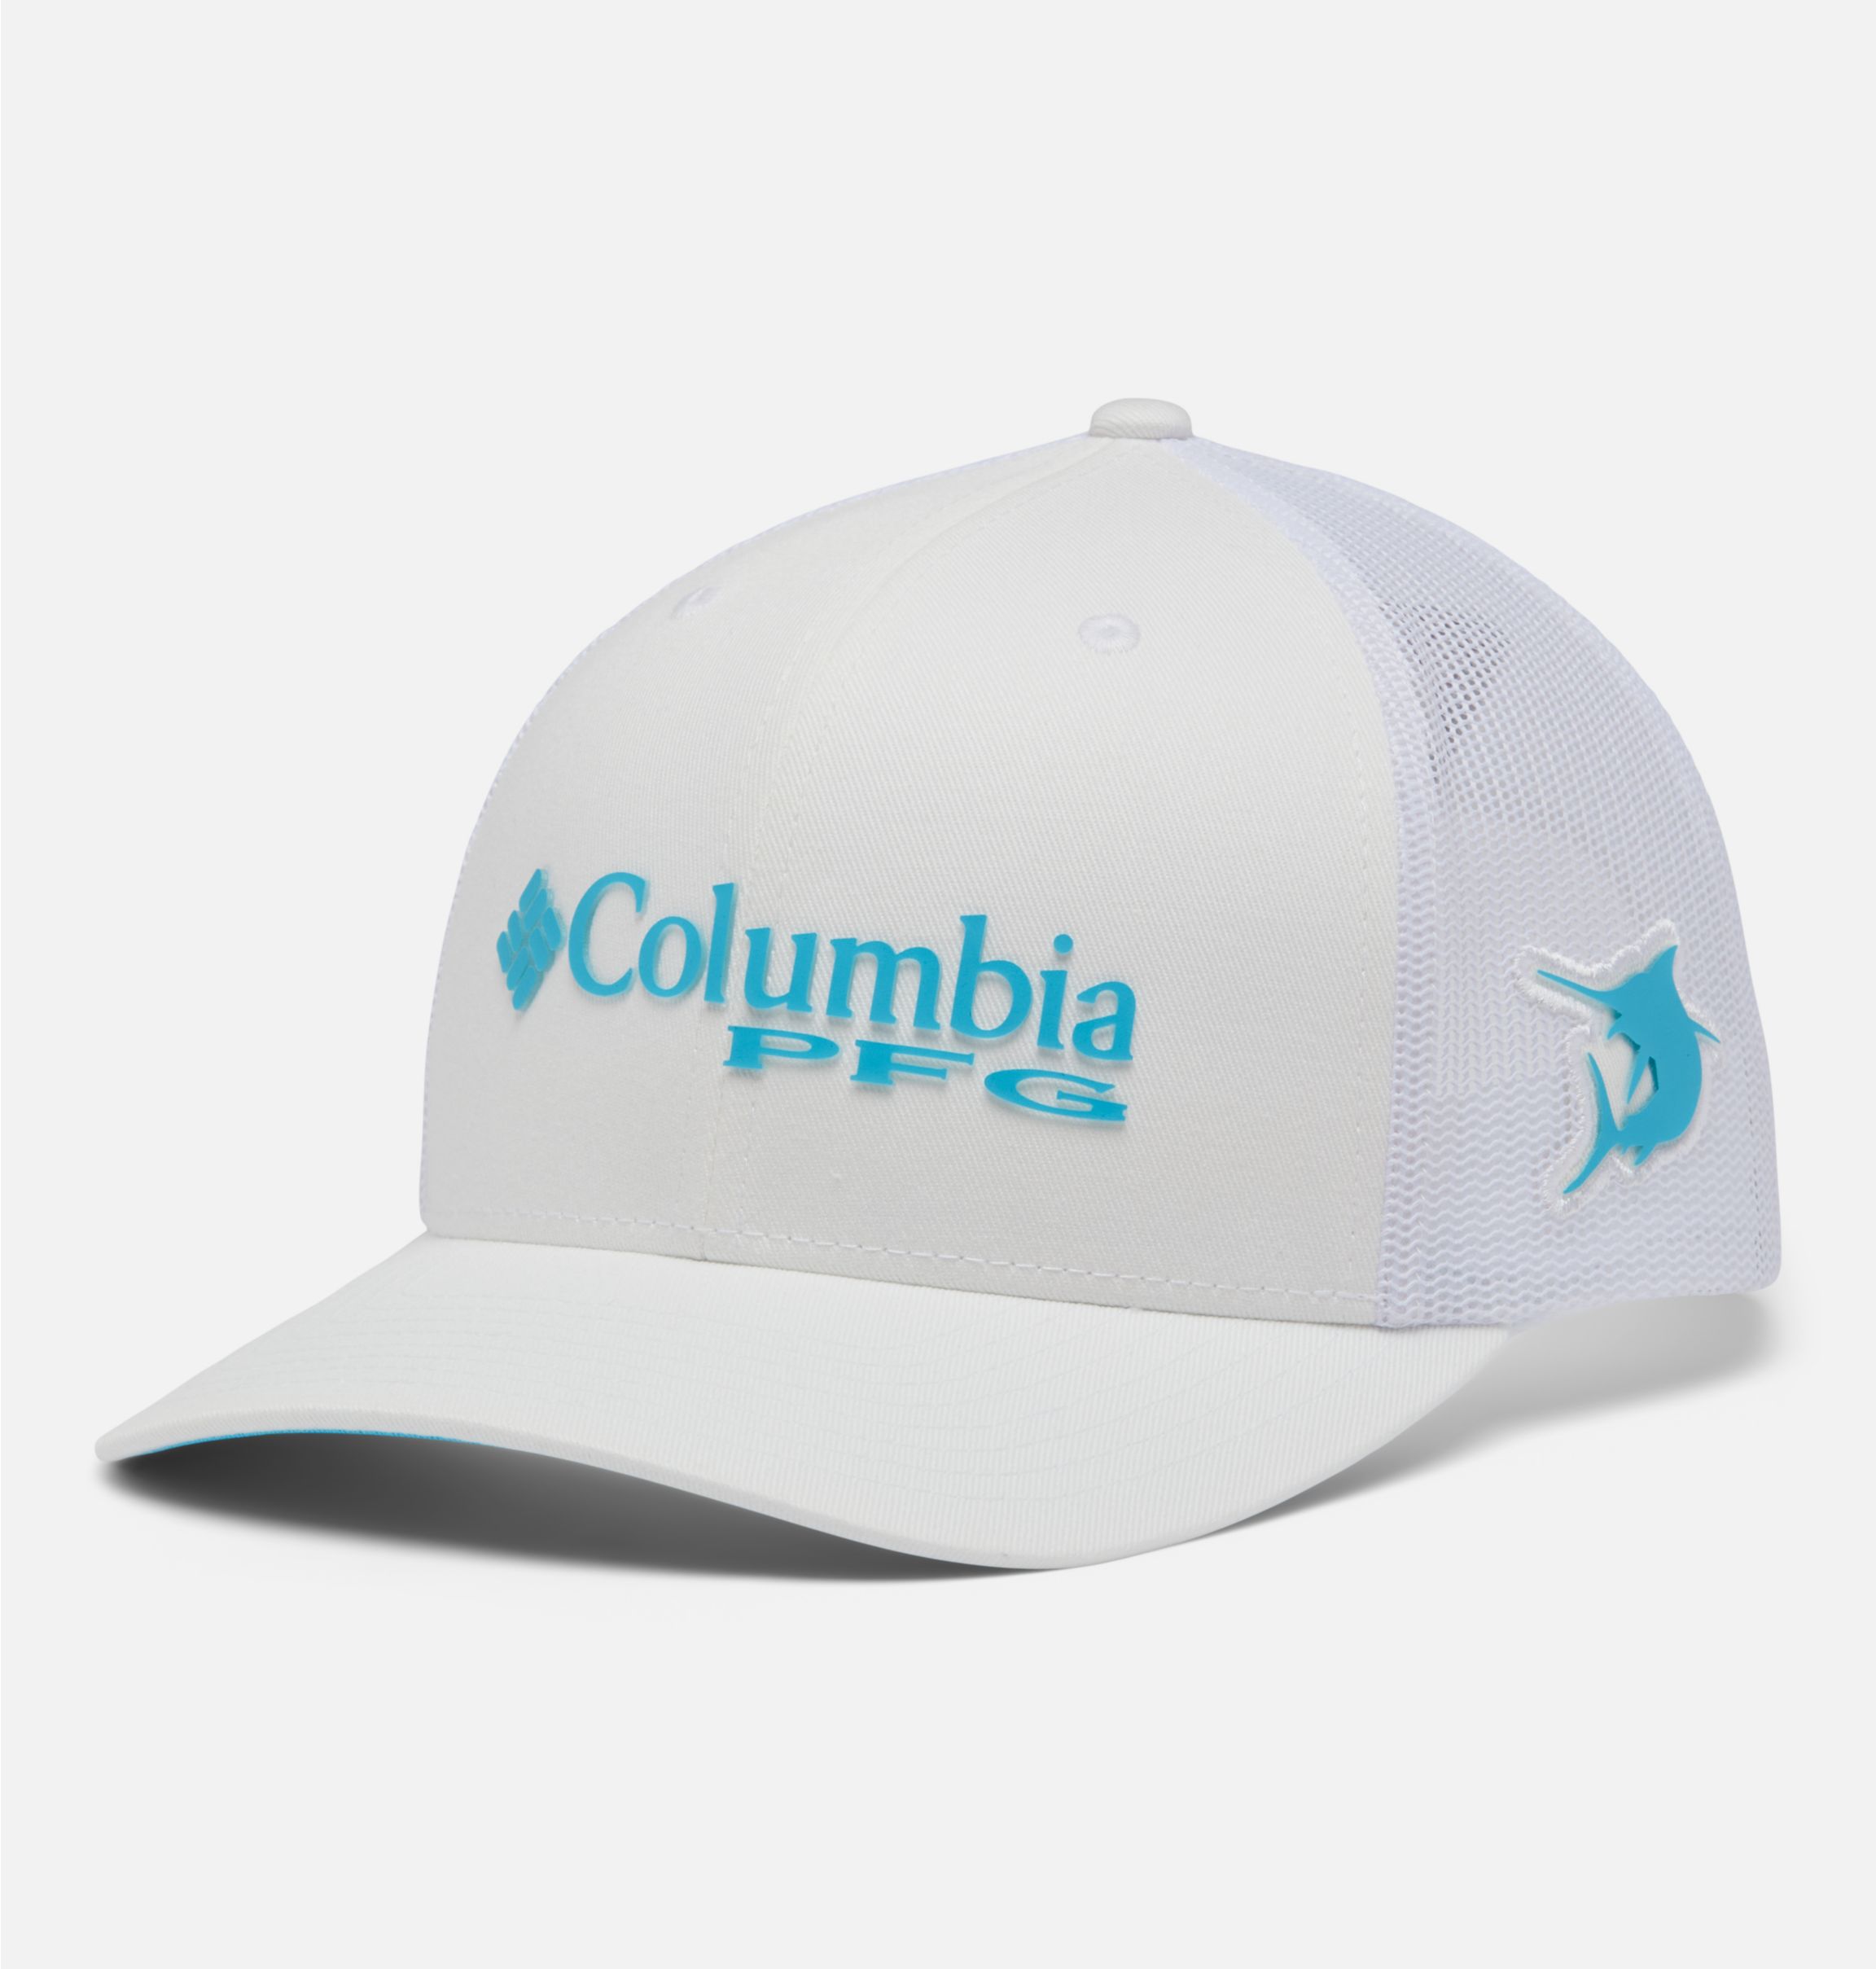 Columbia PFG Hook Logo Snapback Mesh Ball Cap in Bright Aqua and White OSFA 